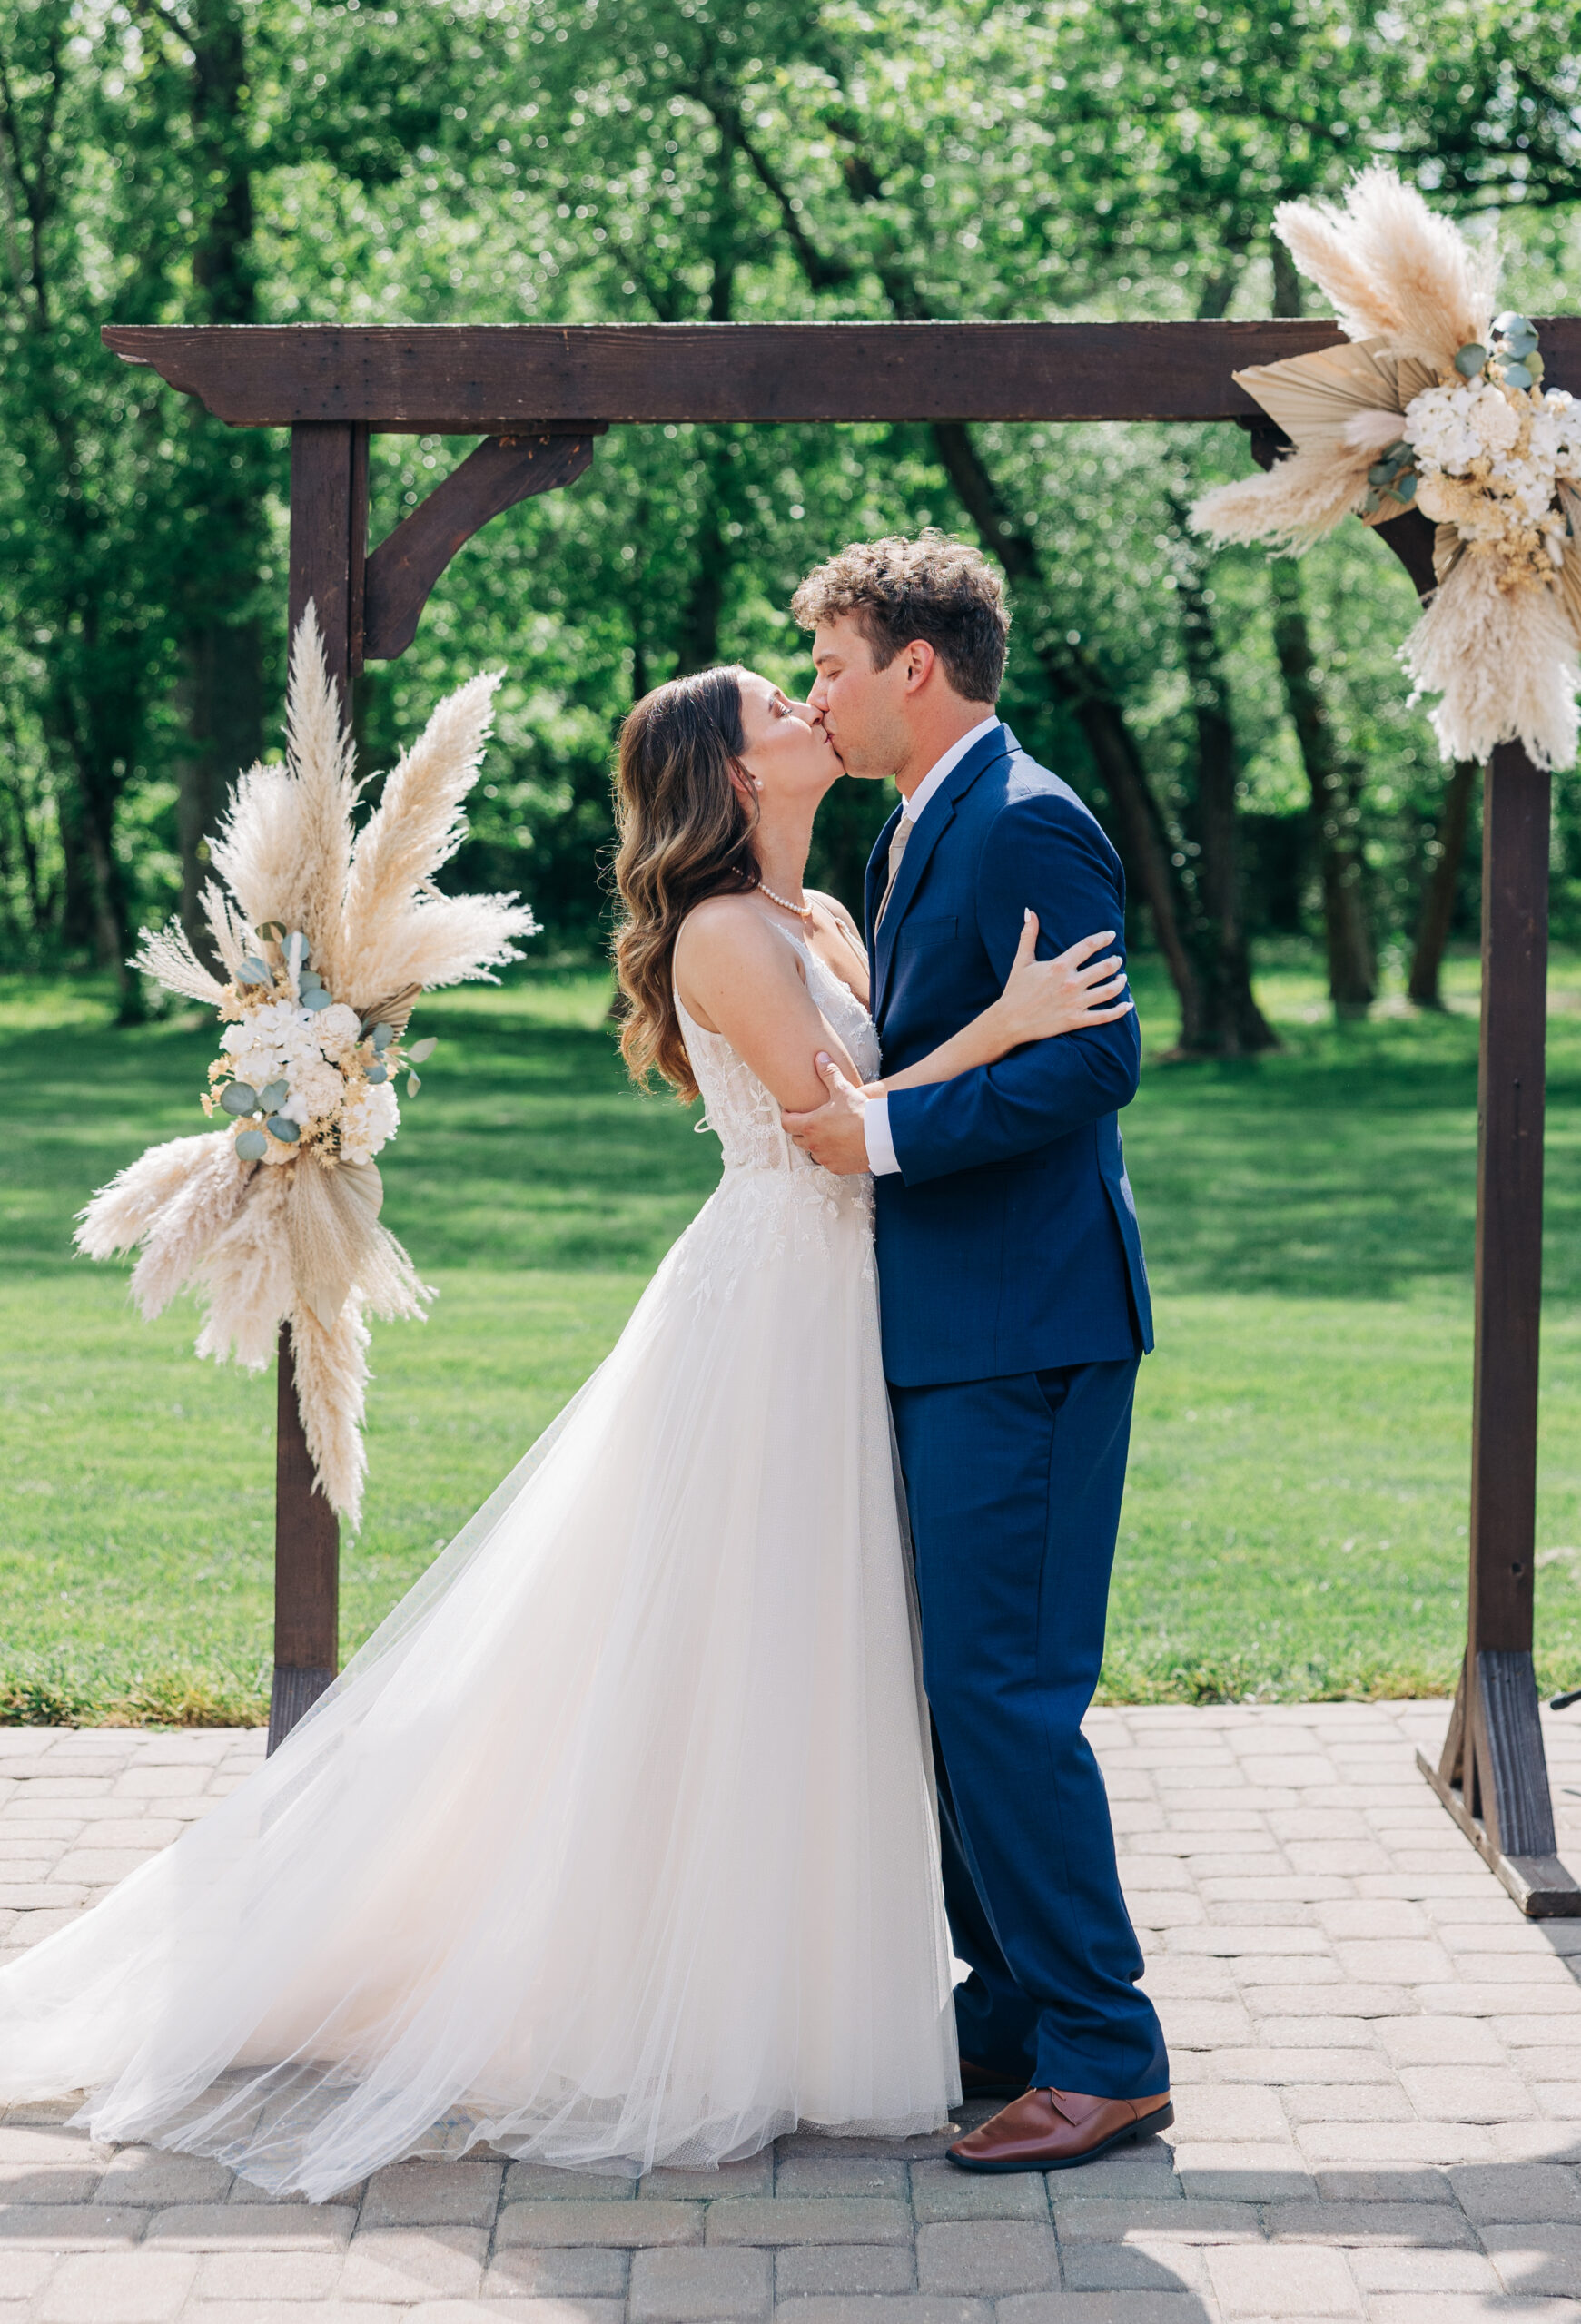 Newlyweds kiss under their outdoor wooden wedding arbor